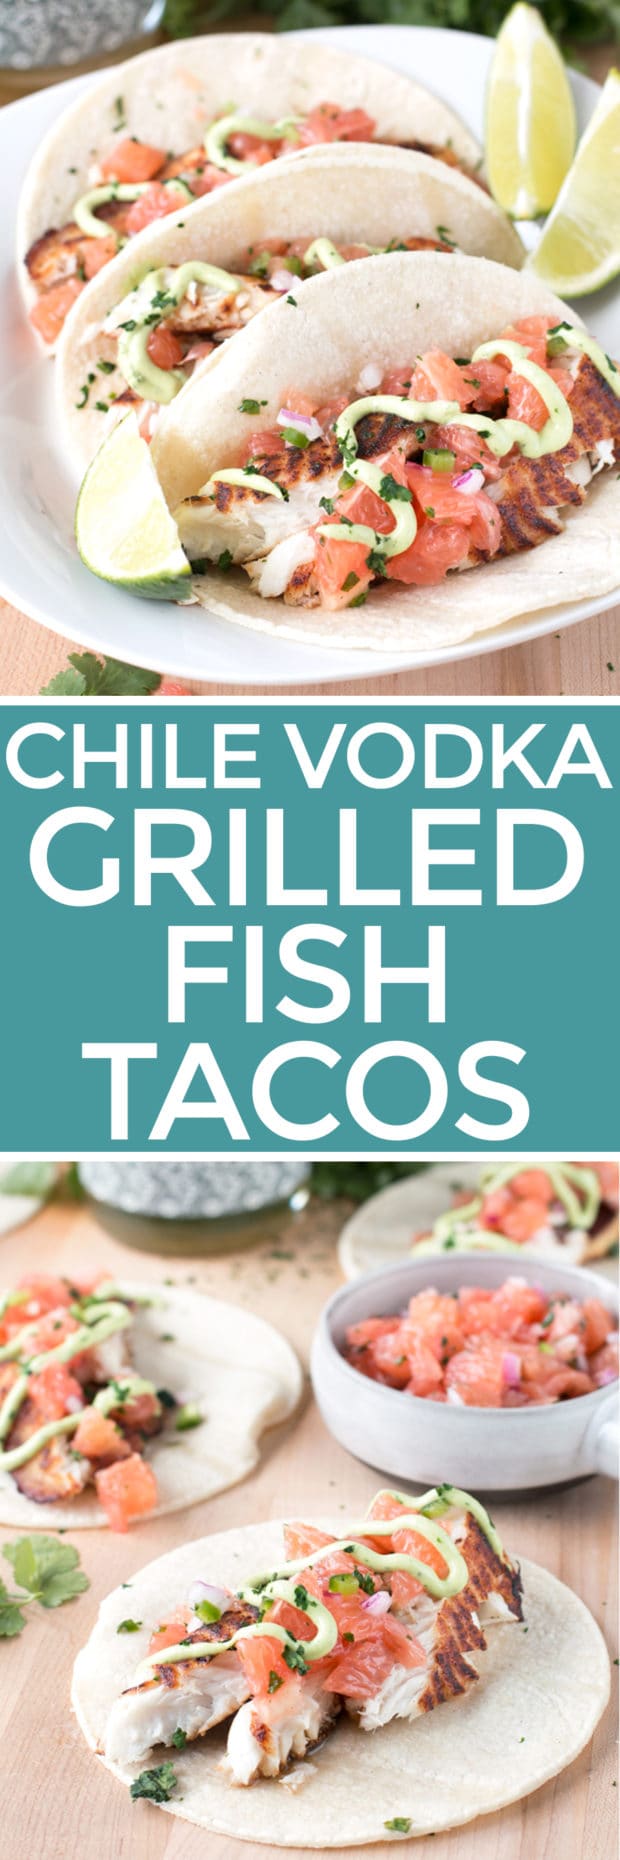 Grilled Chile Vodka Fish Tacos | cakenknife.com #summer #taco #recipe